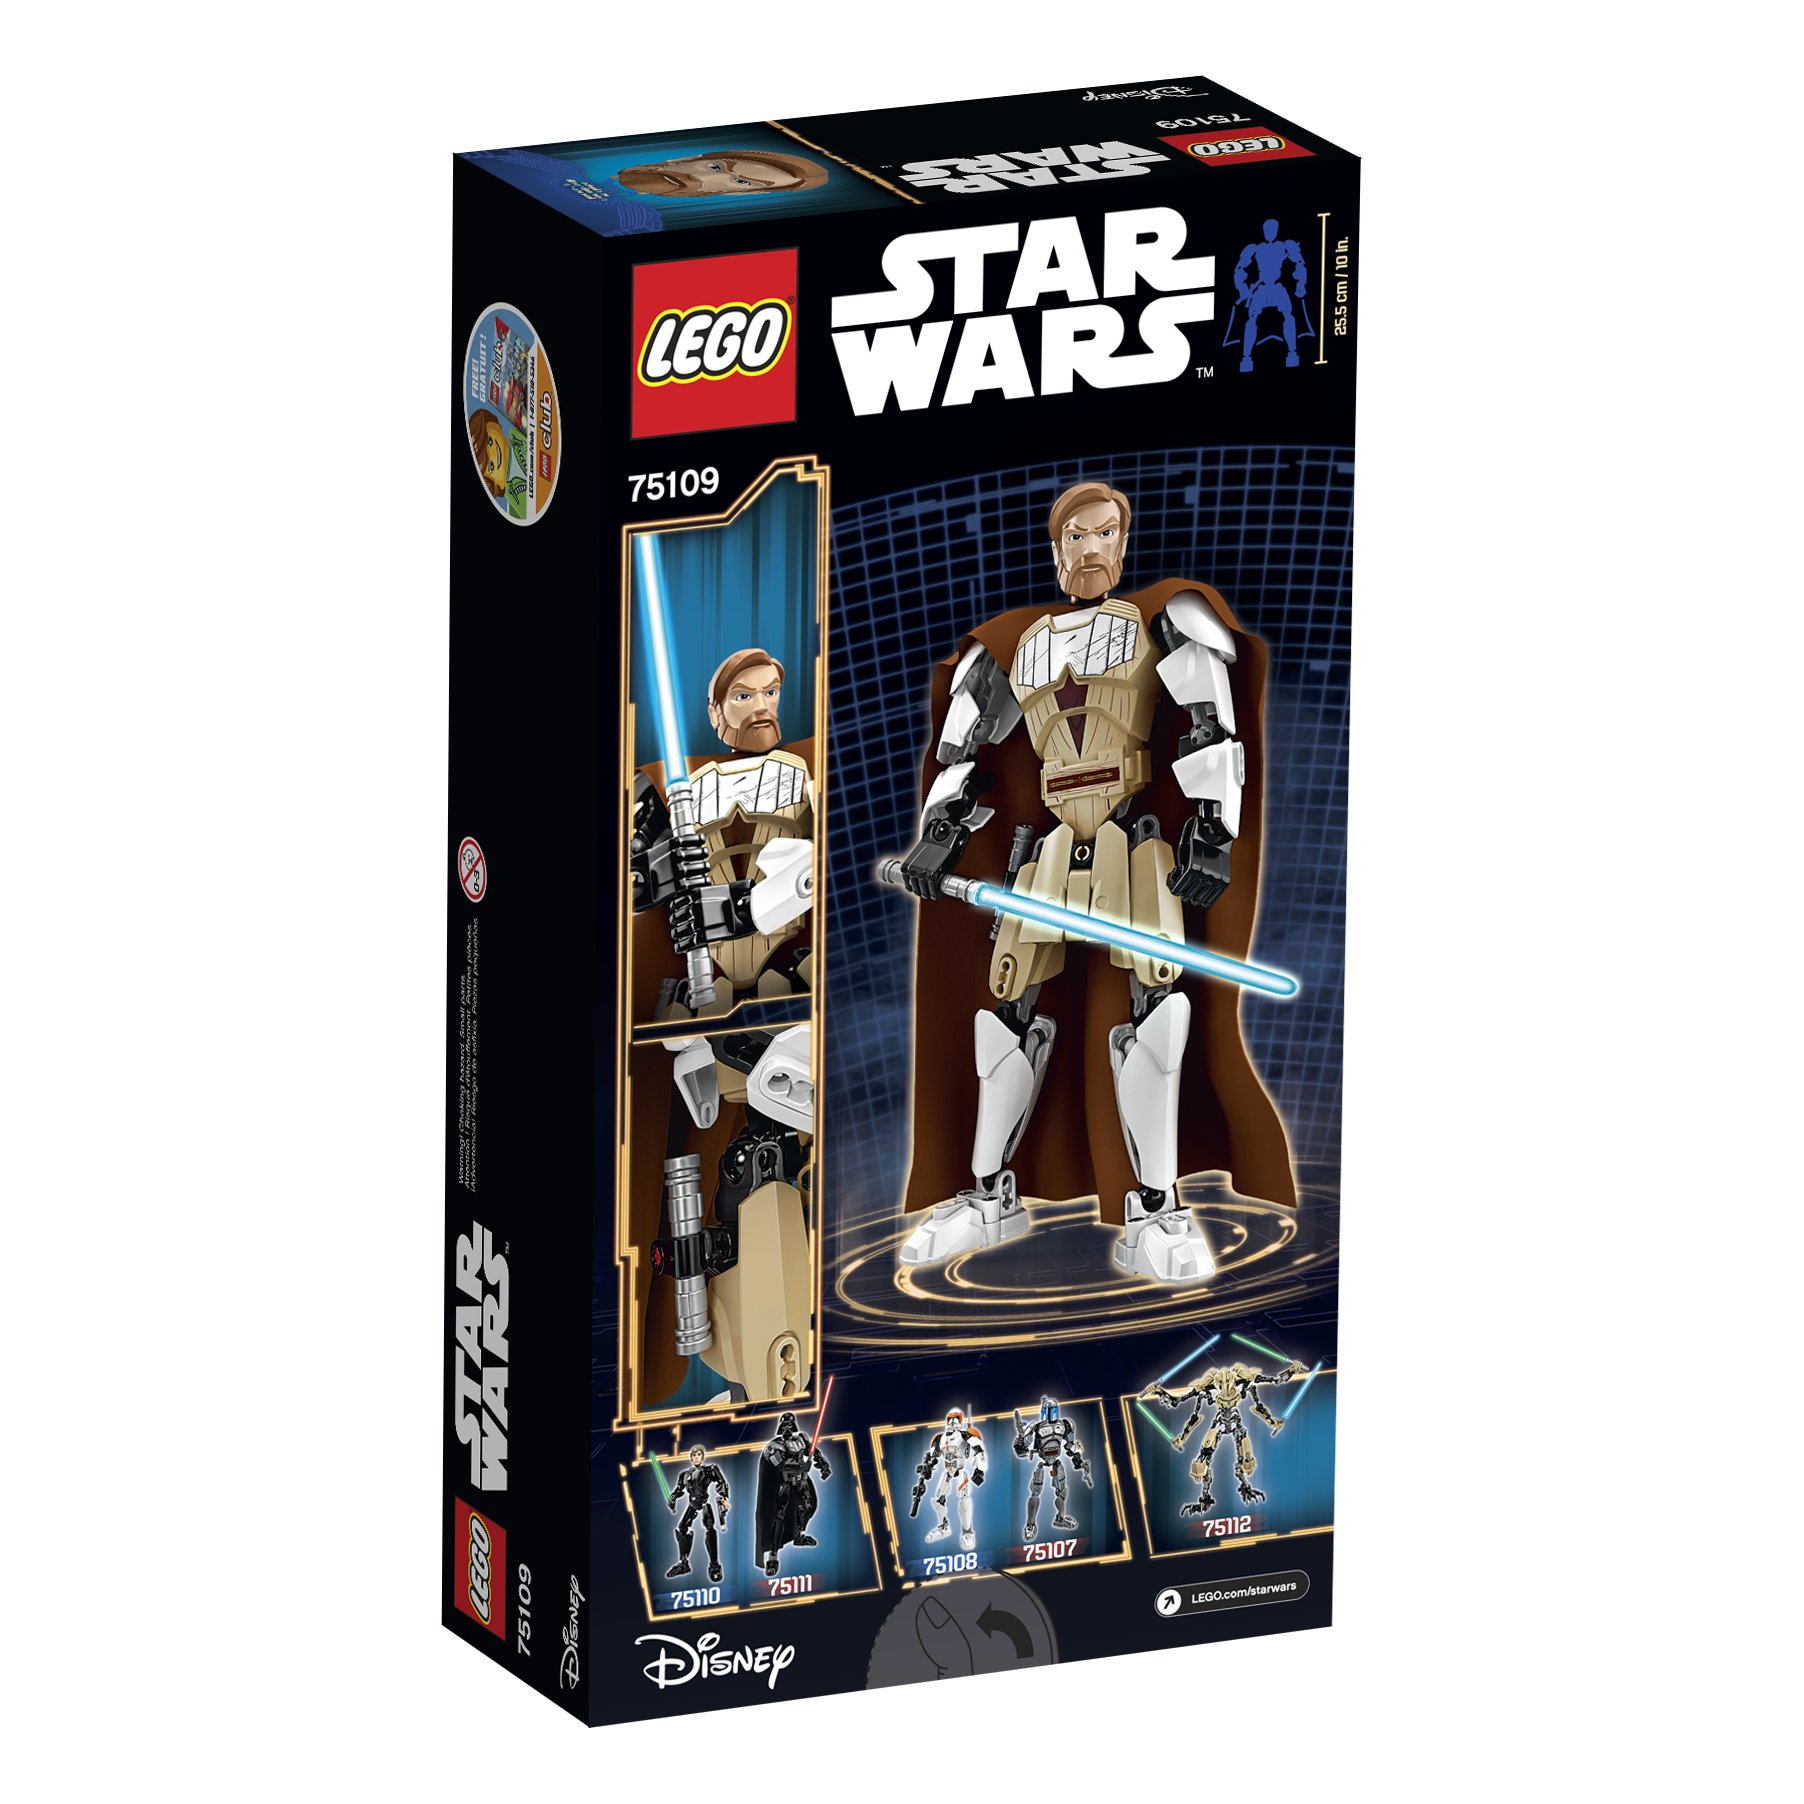 LEGO Star Wars 75109 OBI-Wan Kenobi Building Kit